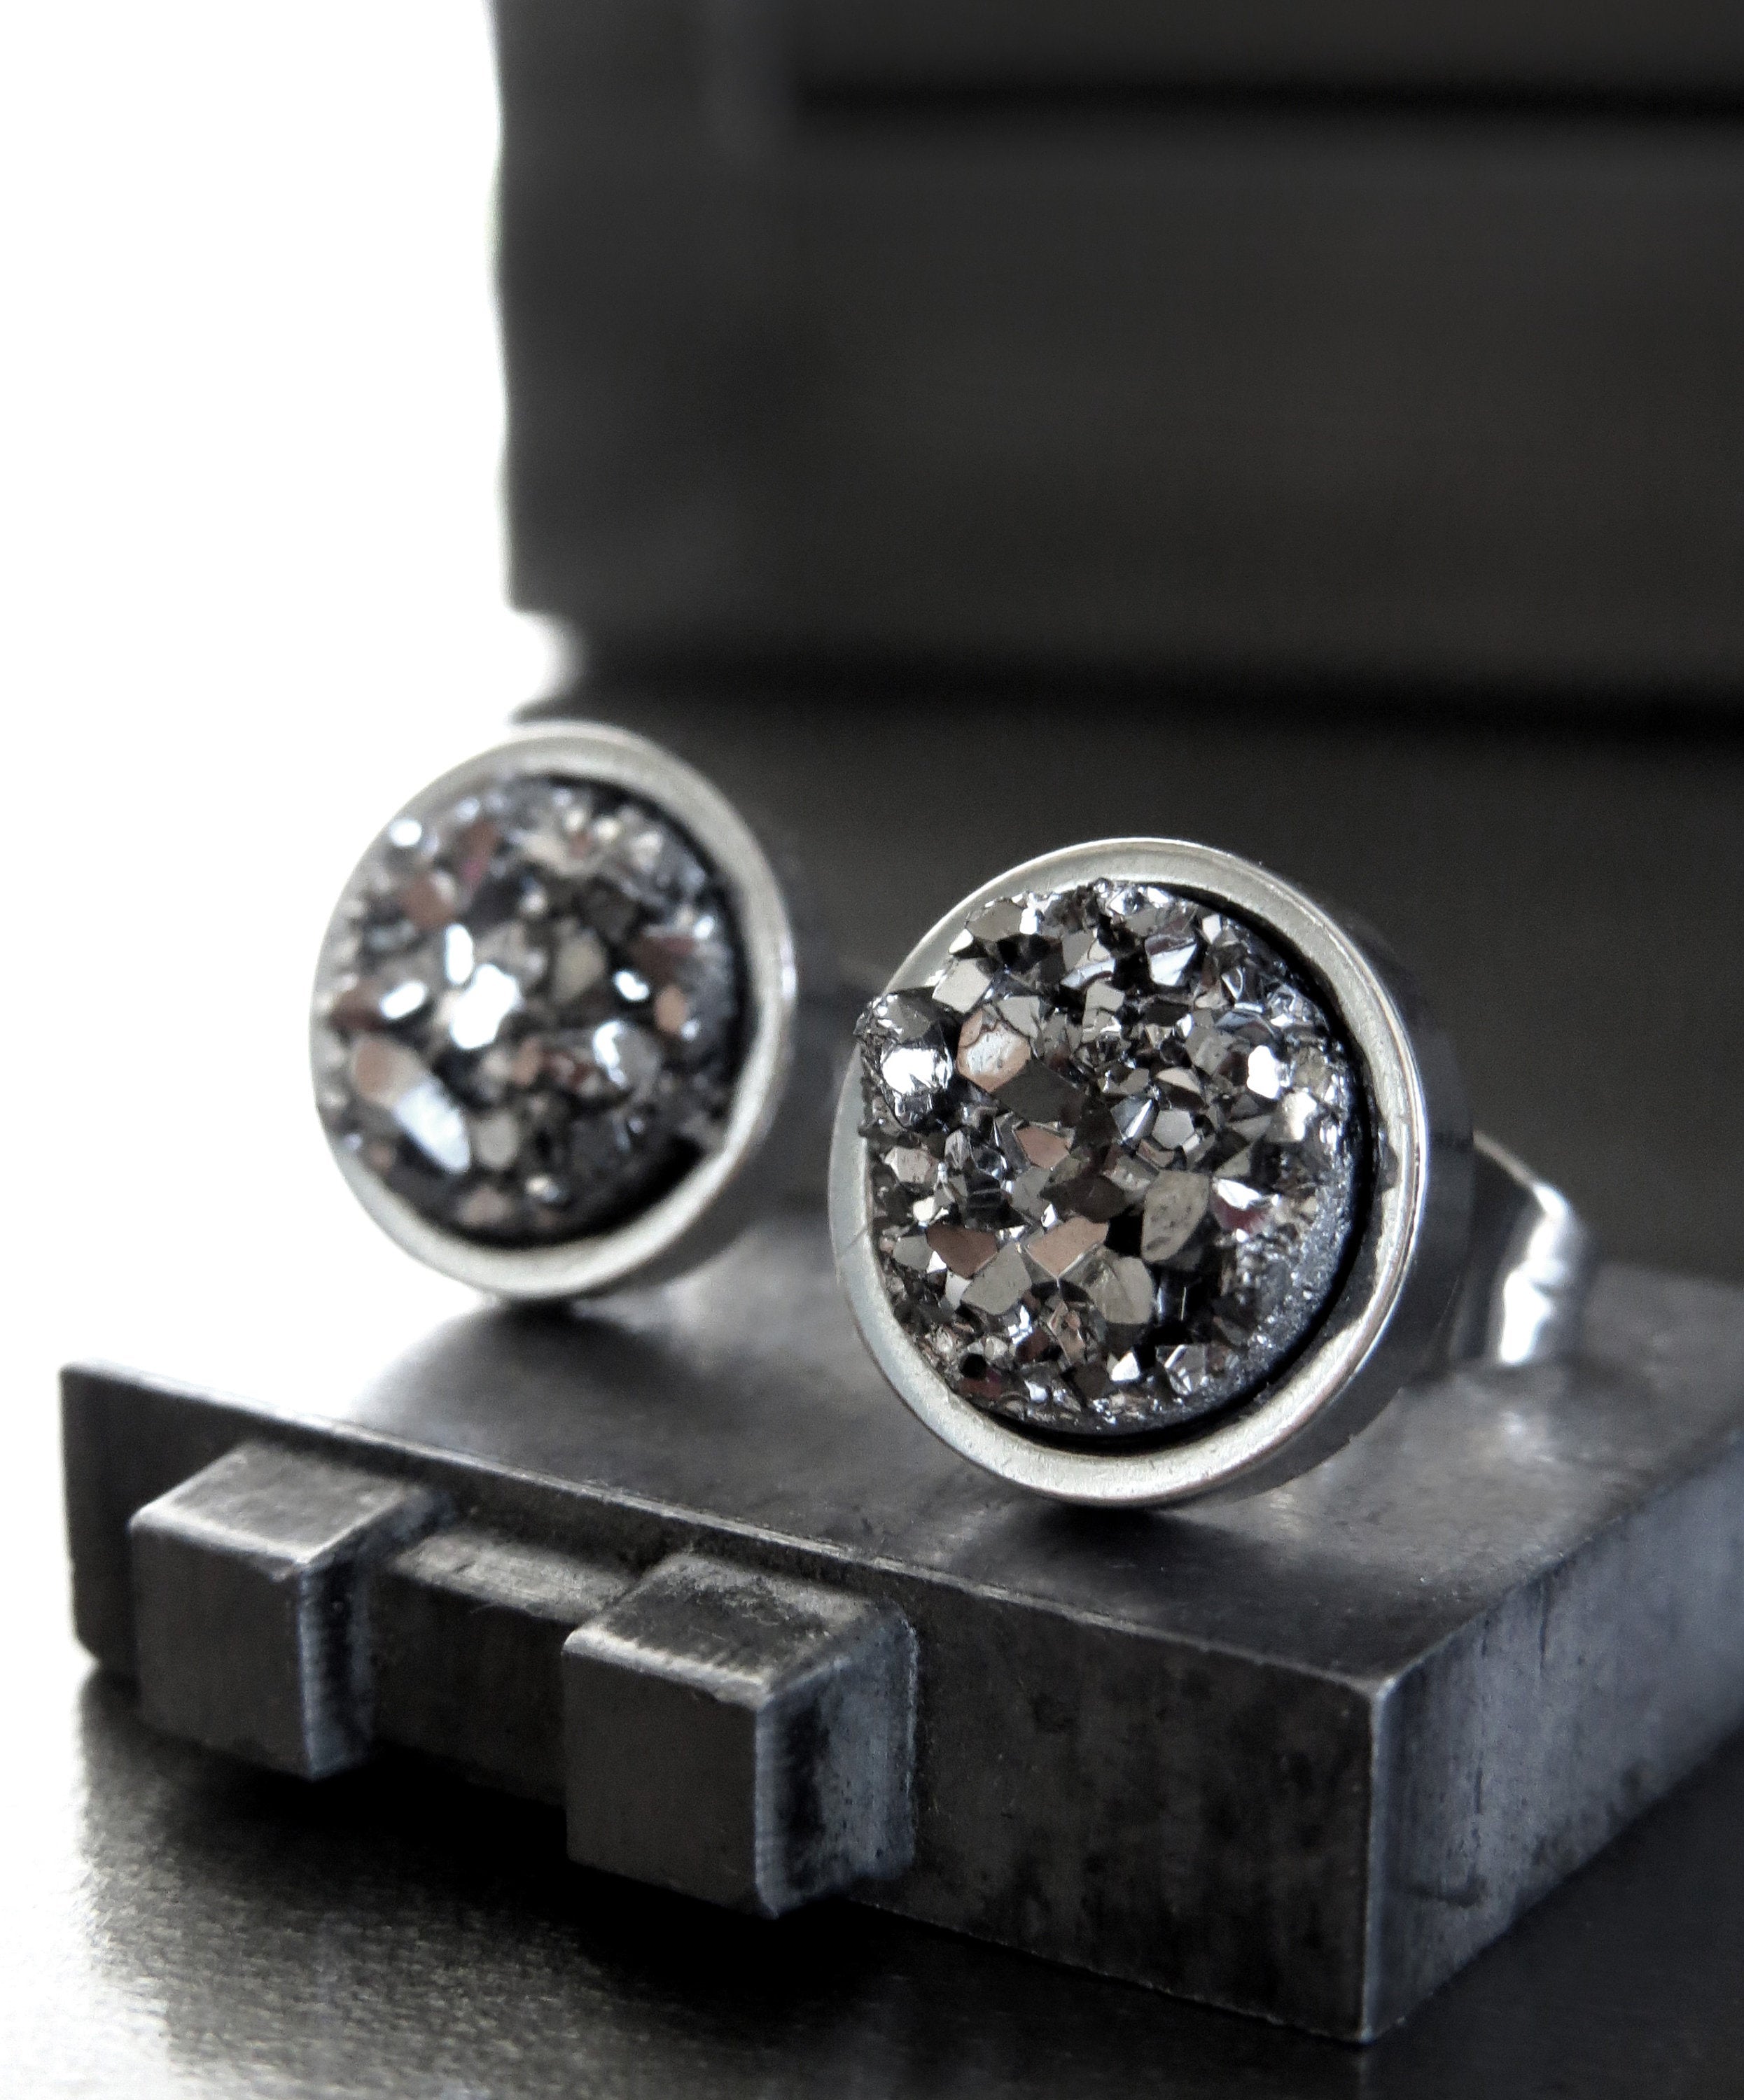 ROUGH TERRAIN - Metallic Gunmetal Stud Earrings with Simulated Druzy Stone in Dark Grey - Large Modern Post Earrings for Men Unisex Women